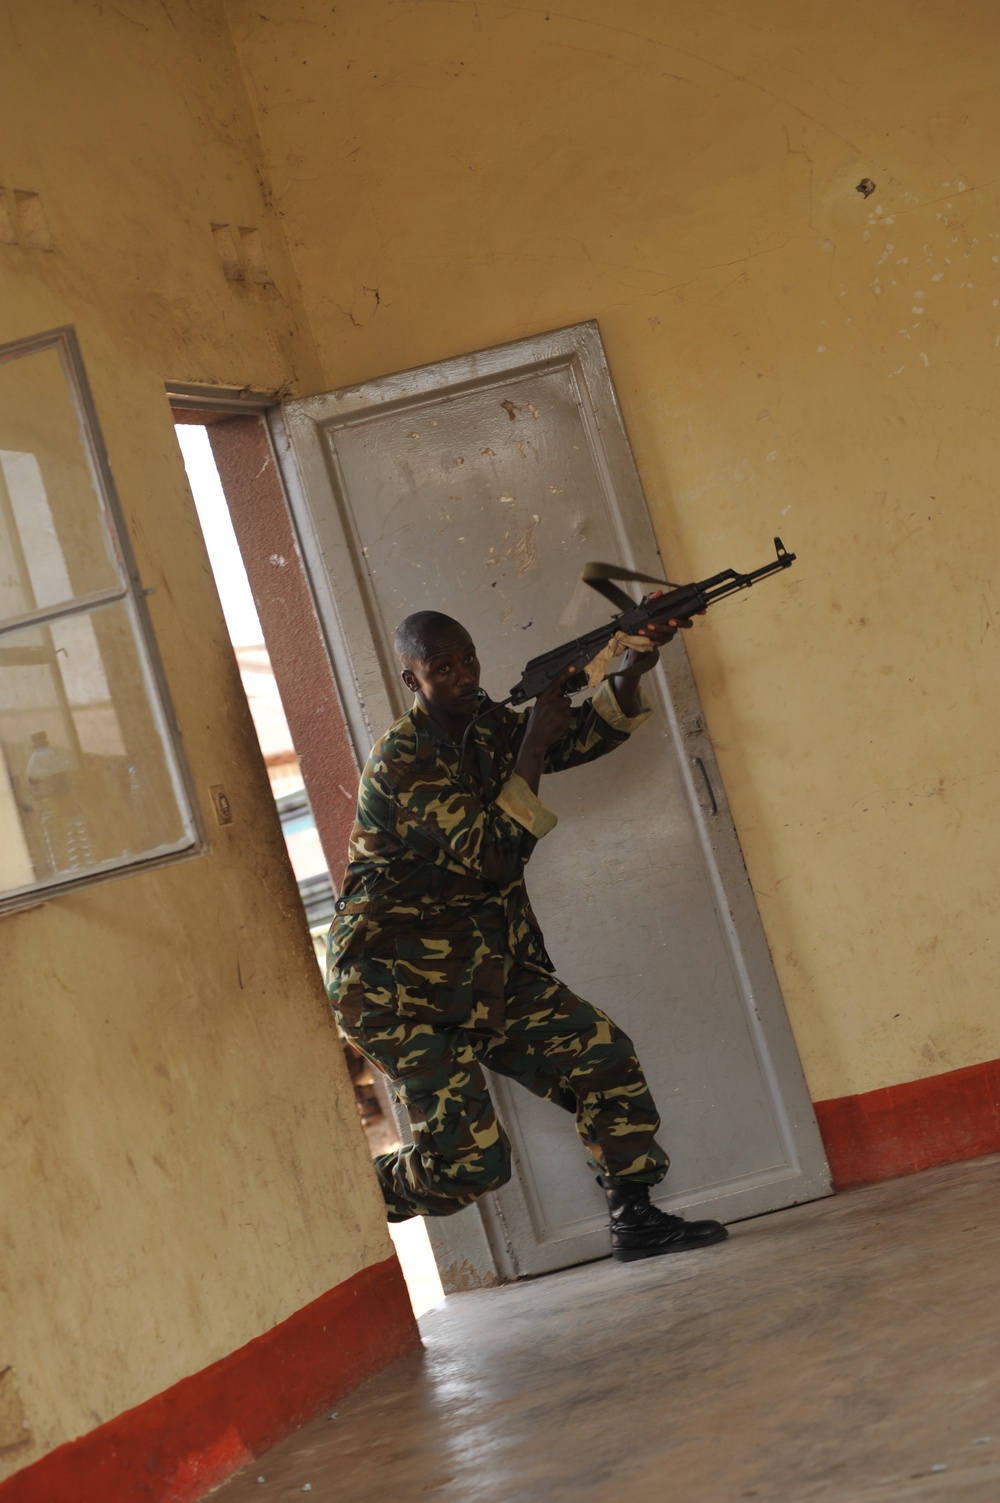 US Marines prepare Burundi Soldiers for Somalia, CAR